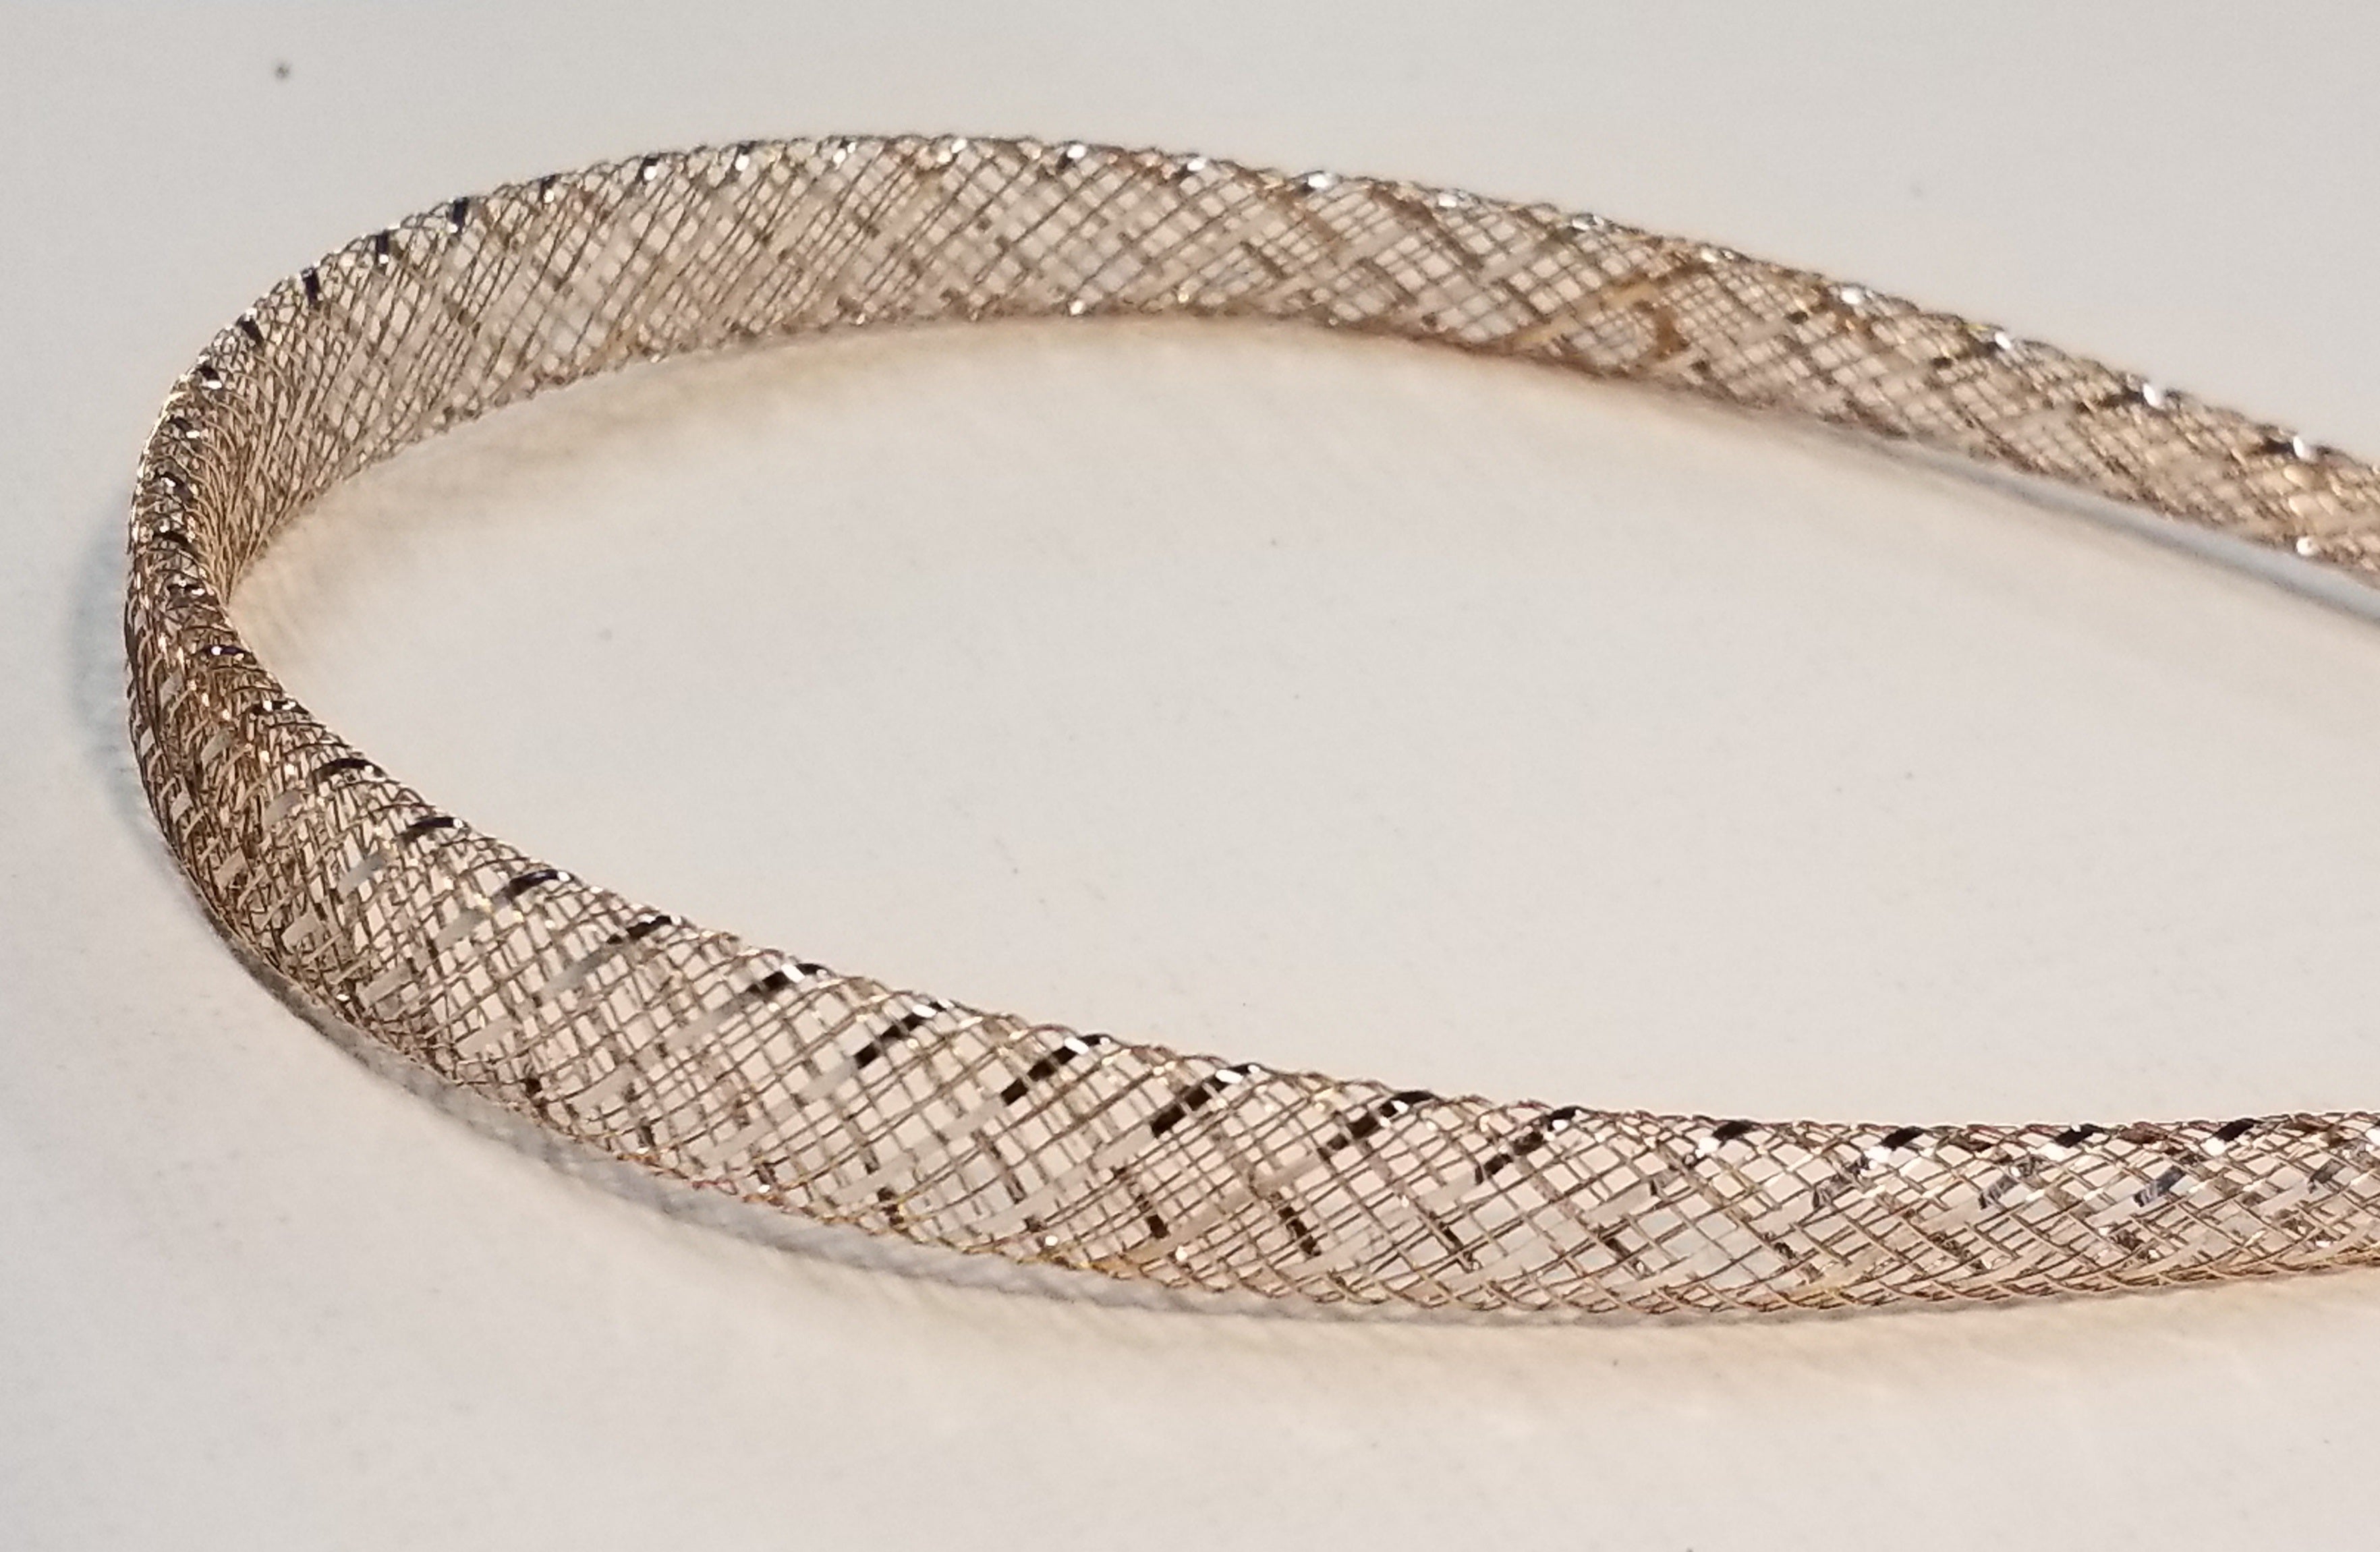 Two-Tone Gold Polished/Textured Bracelet